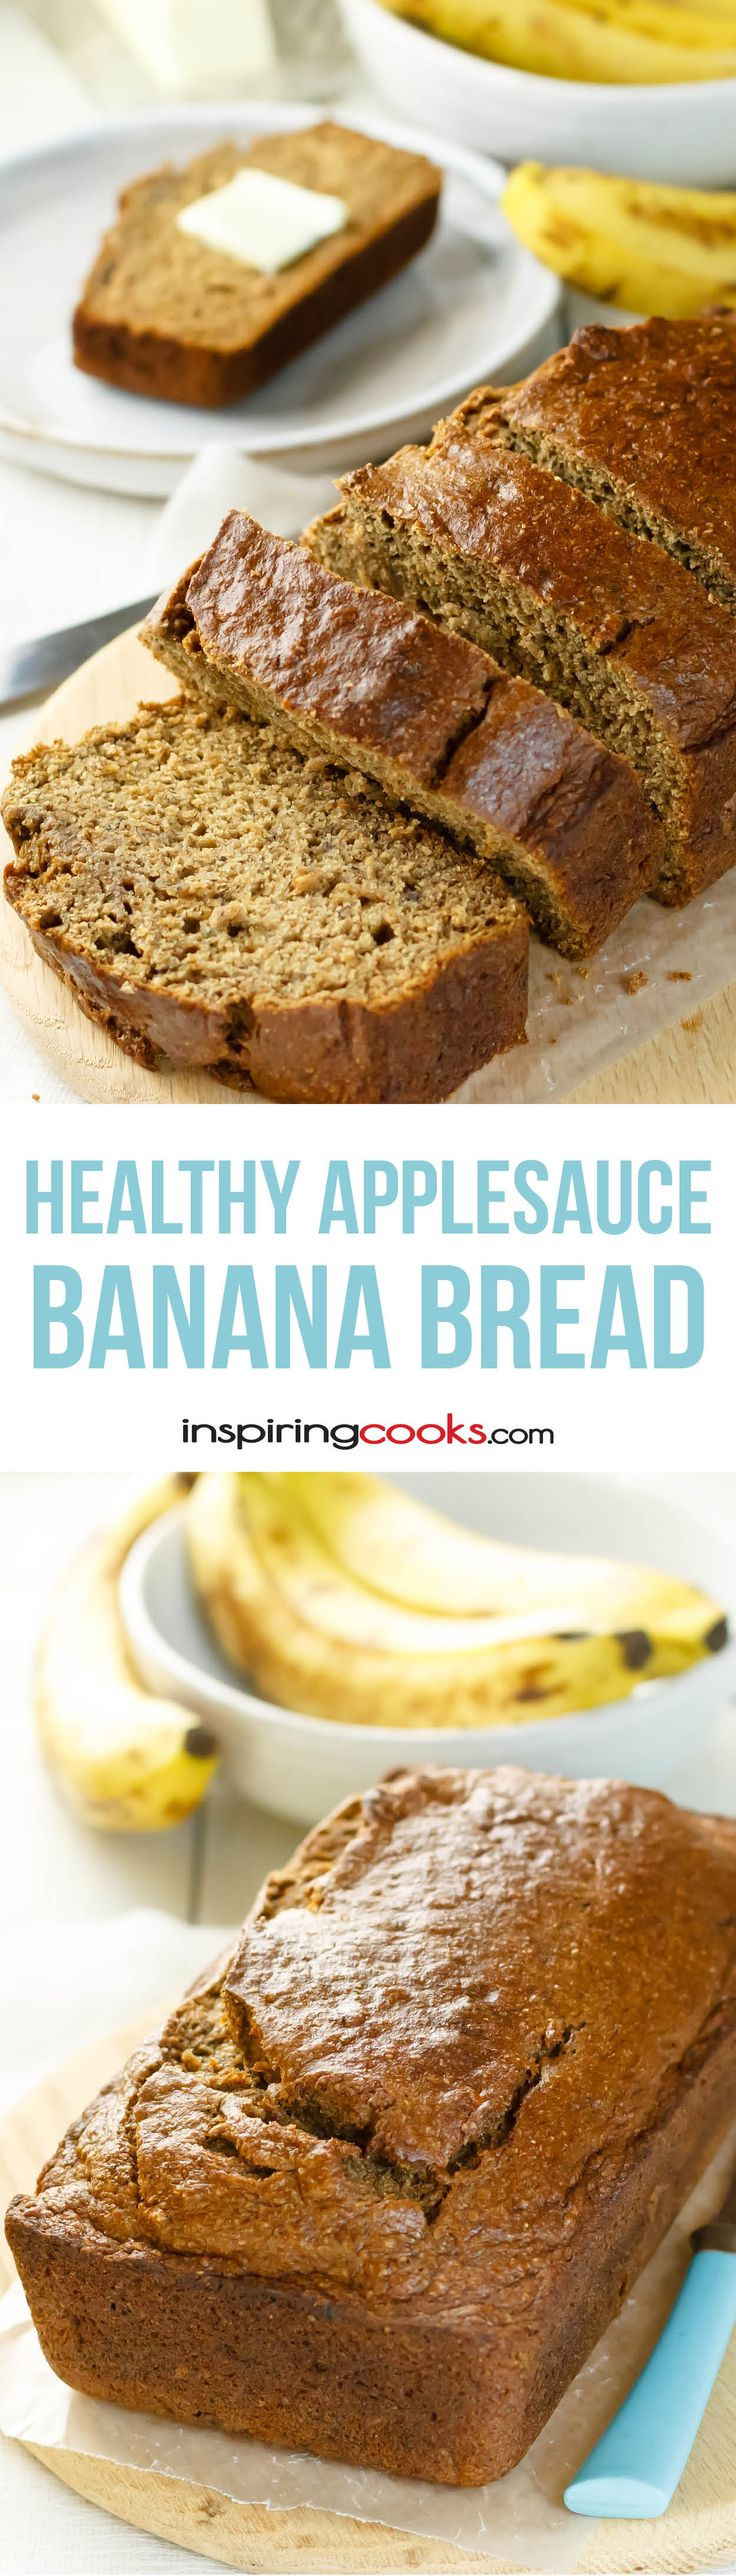 Healthy Banana Bread Recipe Applesauce
 Check out Healthy Banana Bread with Applesauce It s so